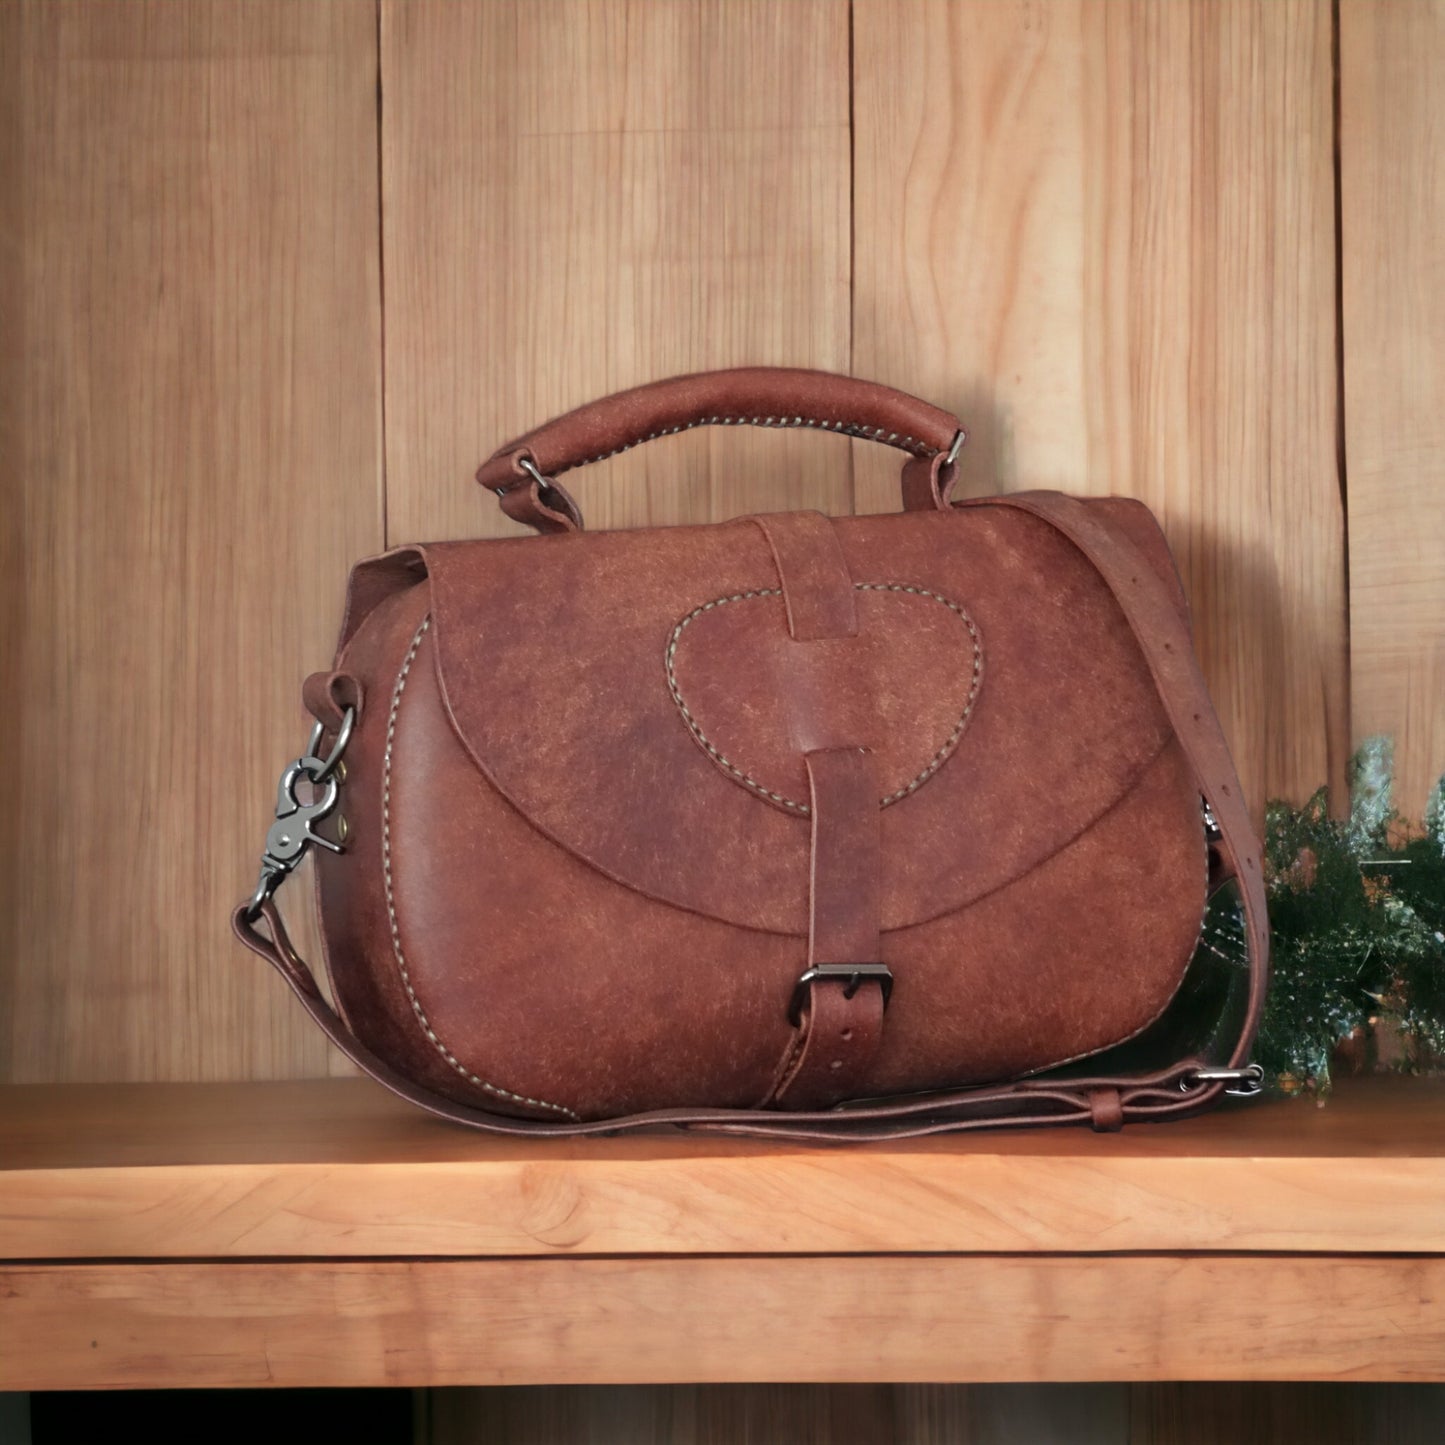 rgc handmade leather brown satchel crossbody bag